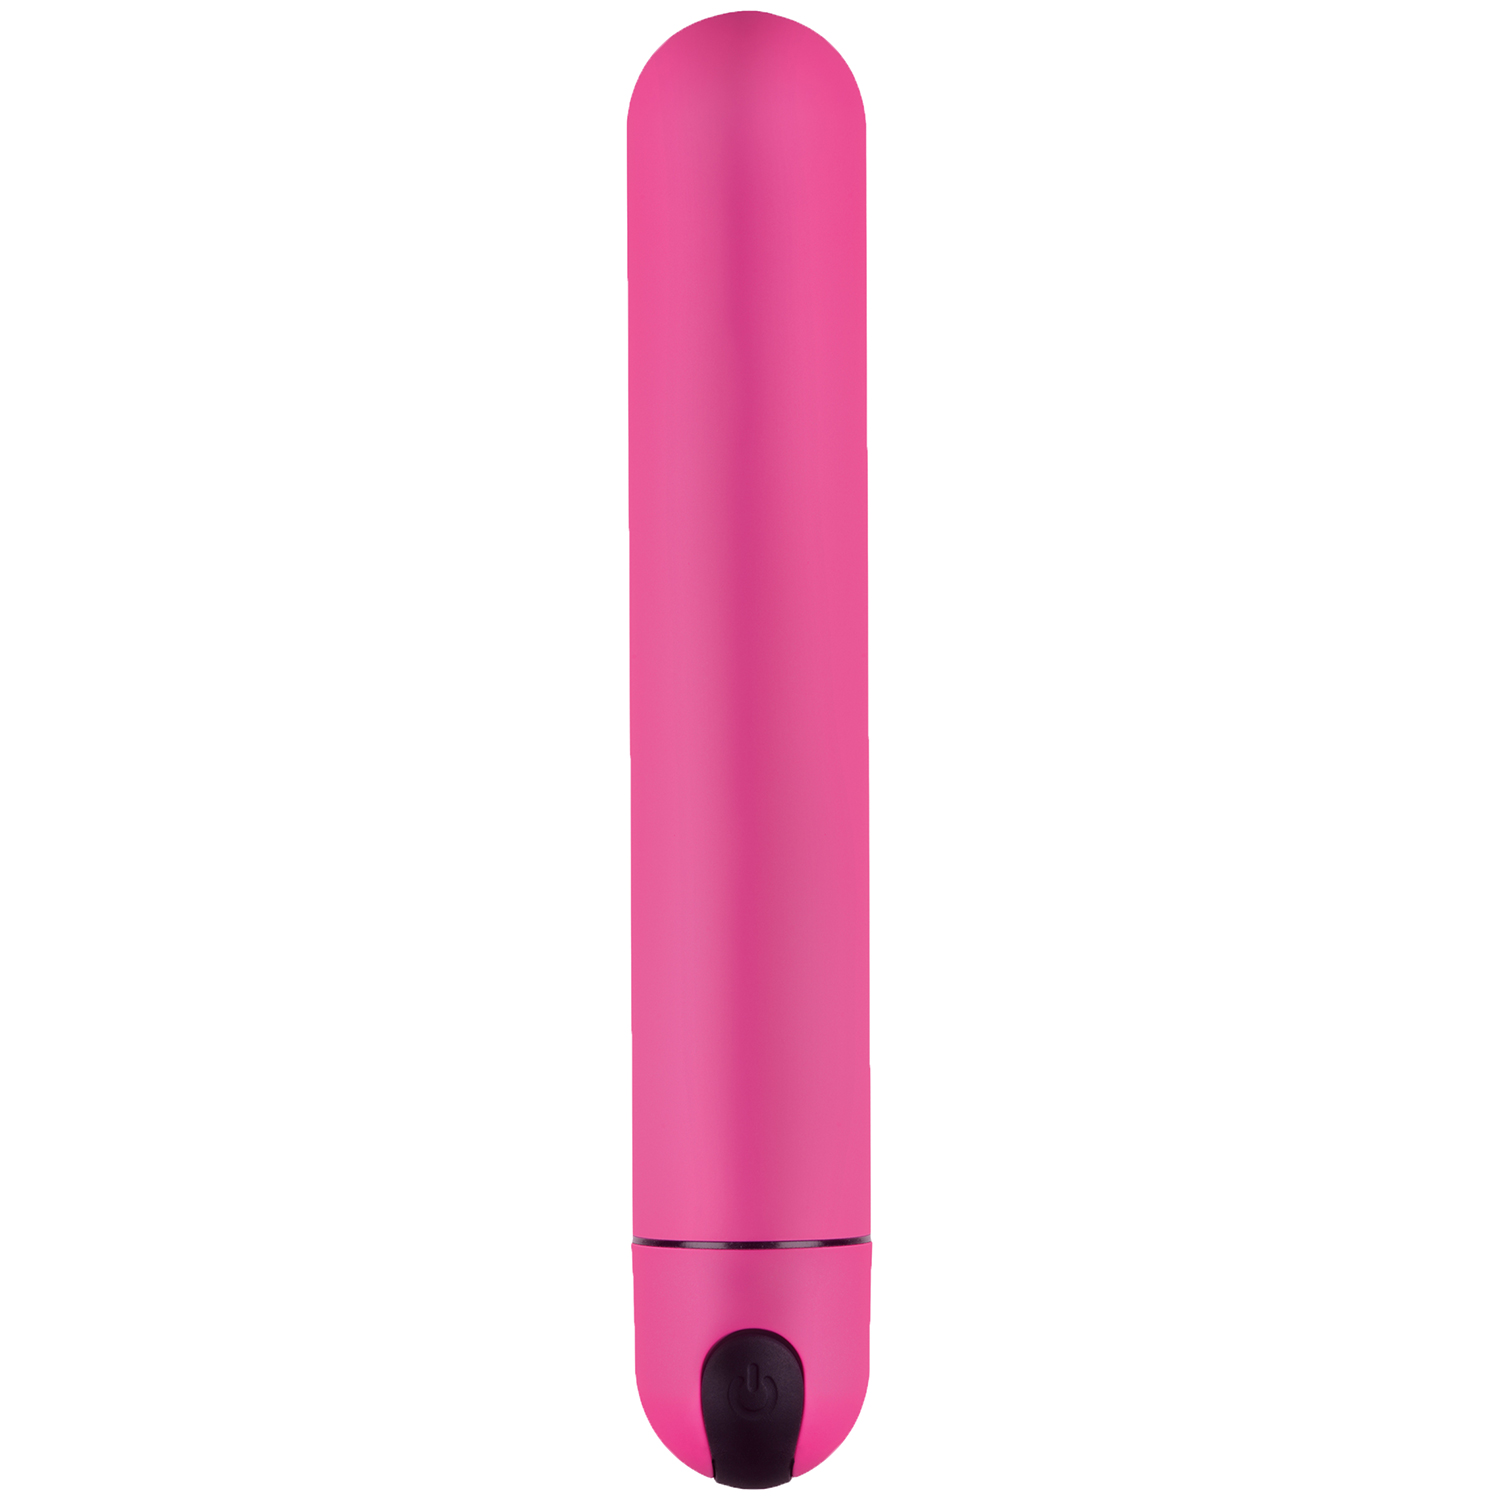 Bang! XL Bullet Dildo Vibrator      - Pink thumbnail